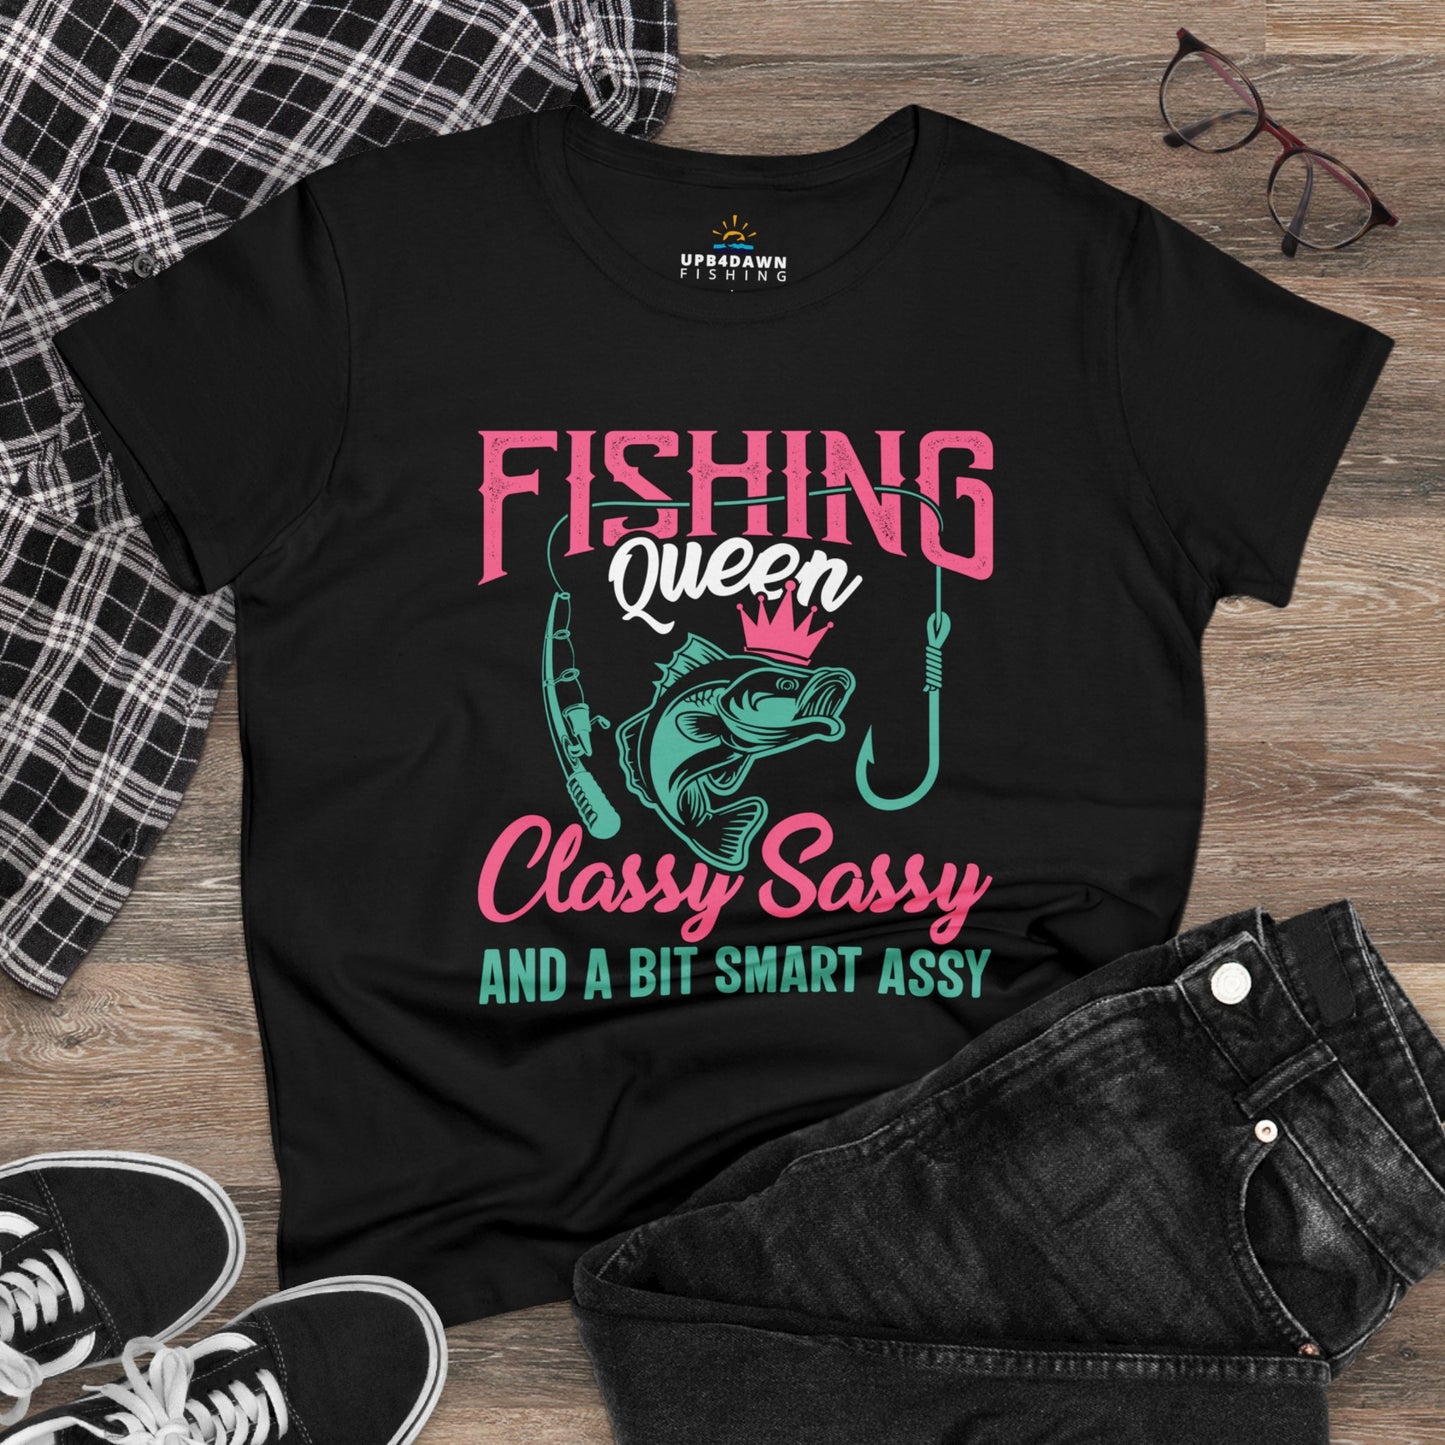 Fishing Queen Classy, Sassy and a bit Smart Assy - Women's Cut T-Shirt